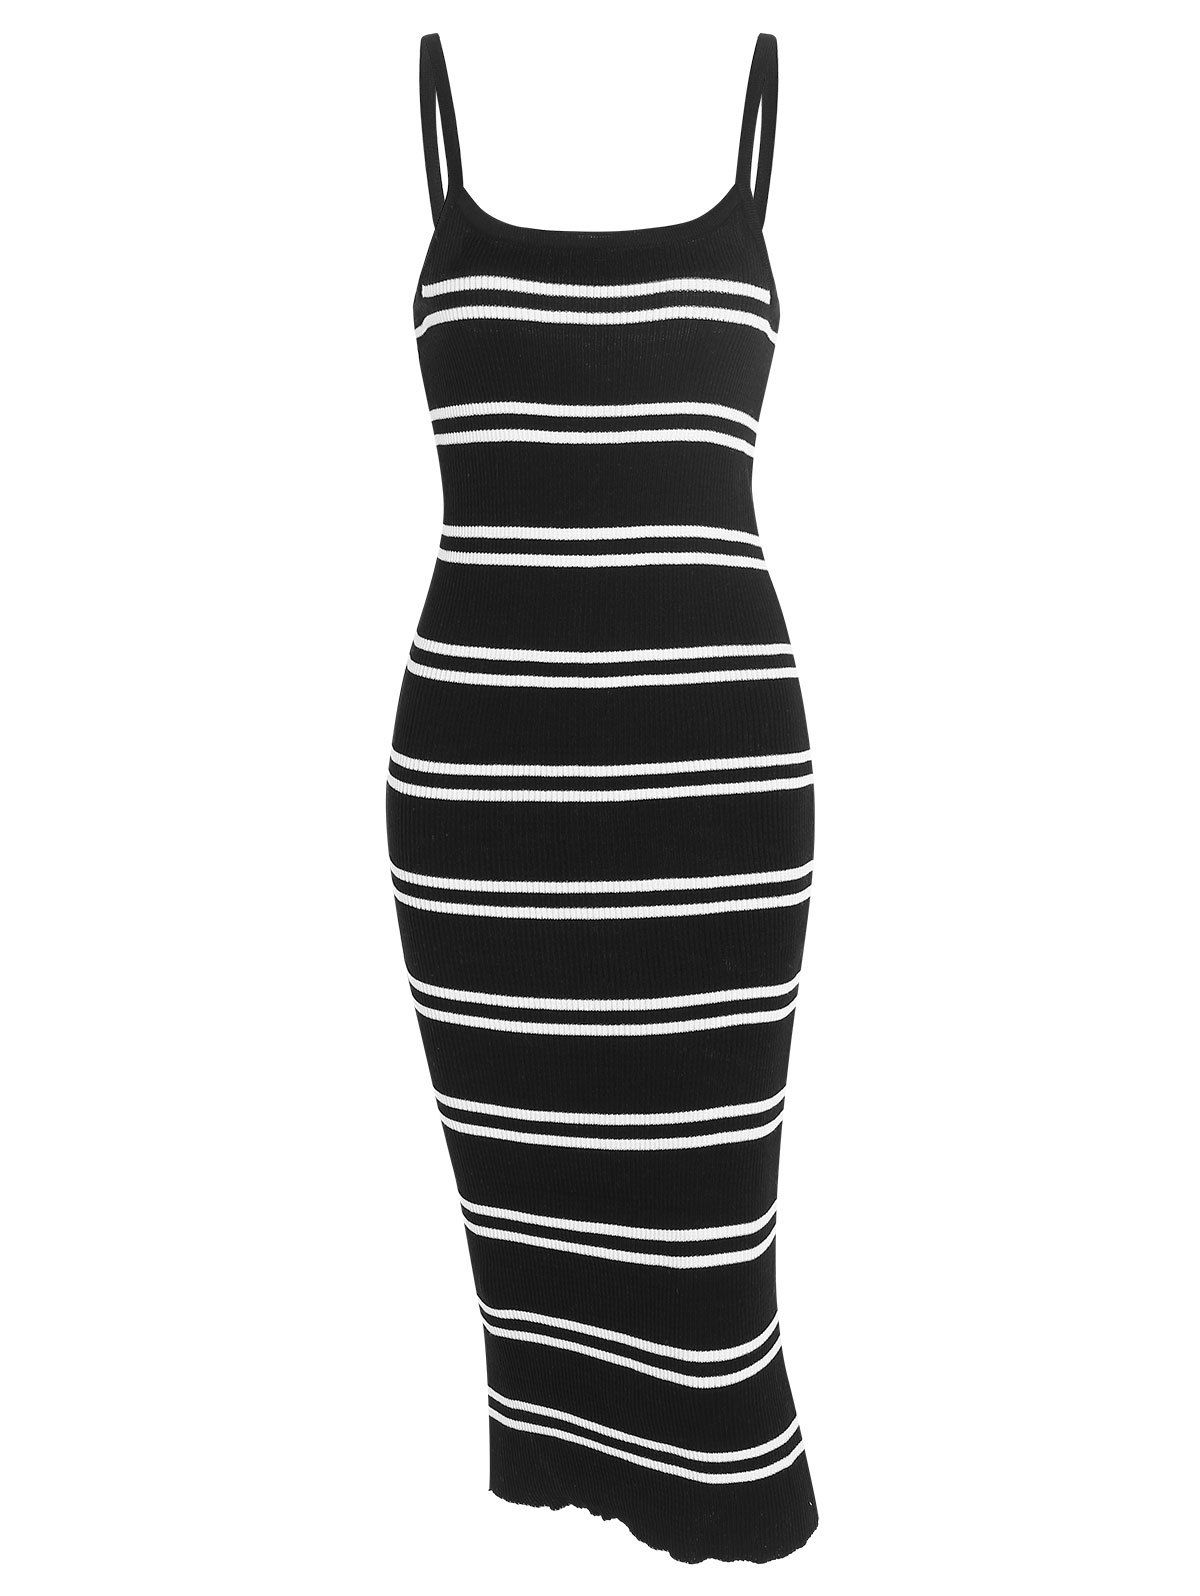 Sleeveless Striped Knit Bodycon Midi Dress - BLACK XL